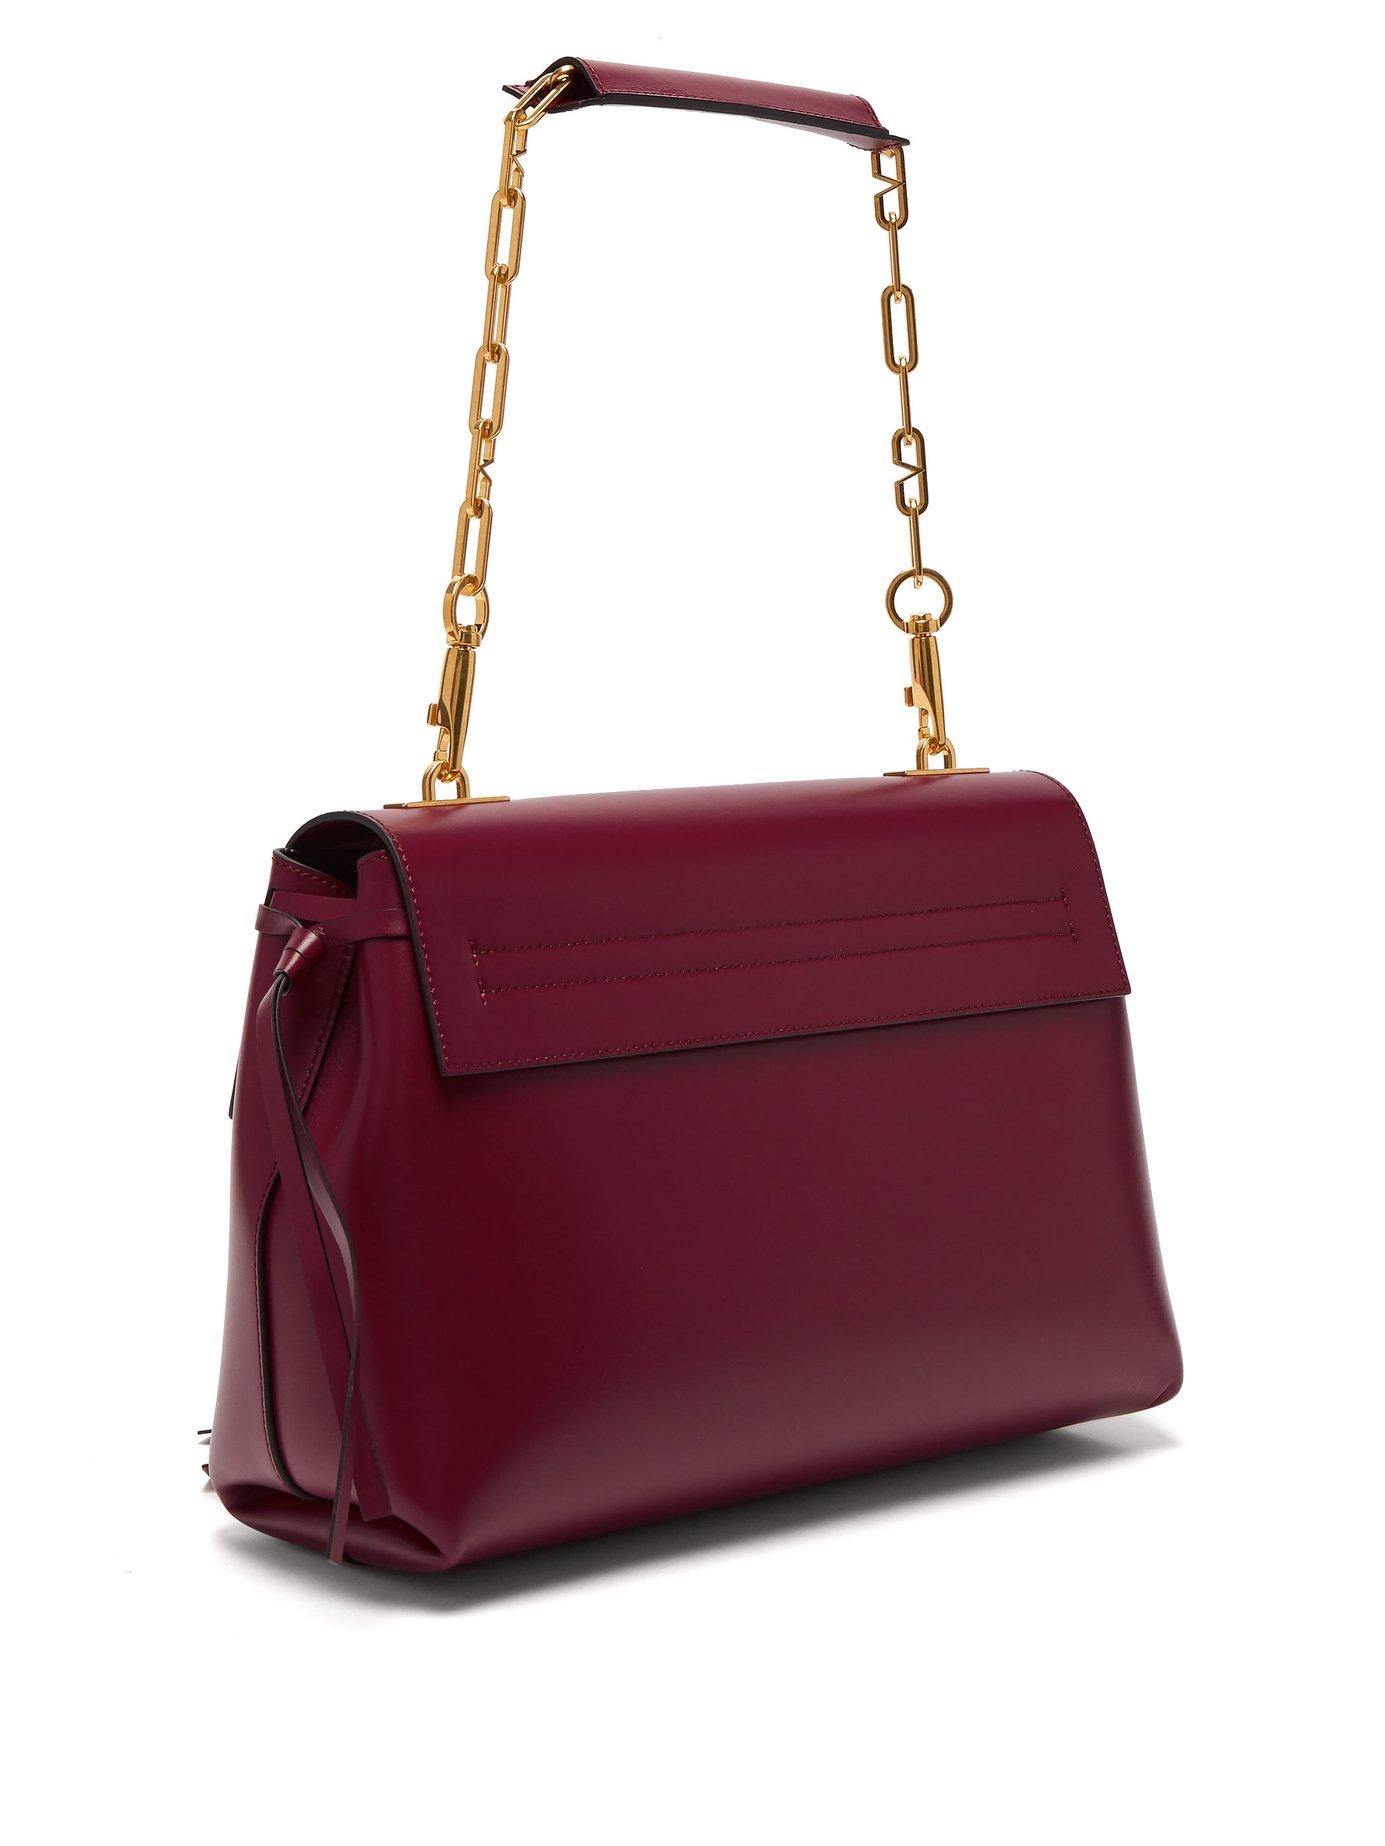 Valentino V Ring Medium Leather Shoulder Bag in Red - Lyst